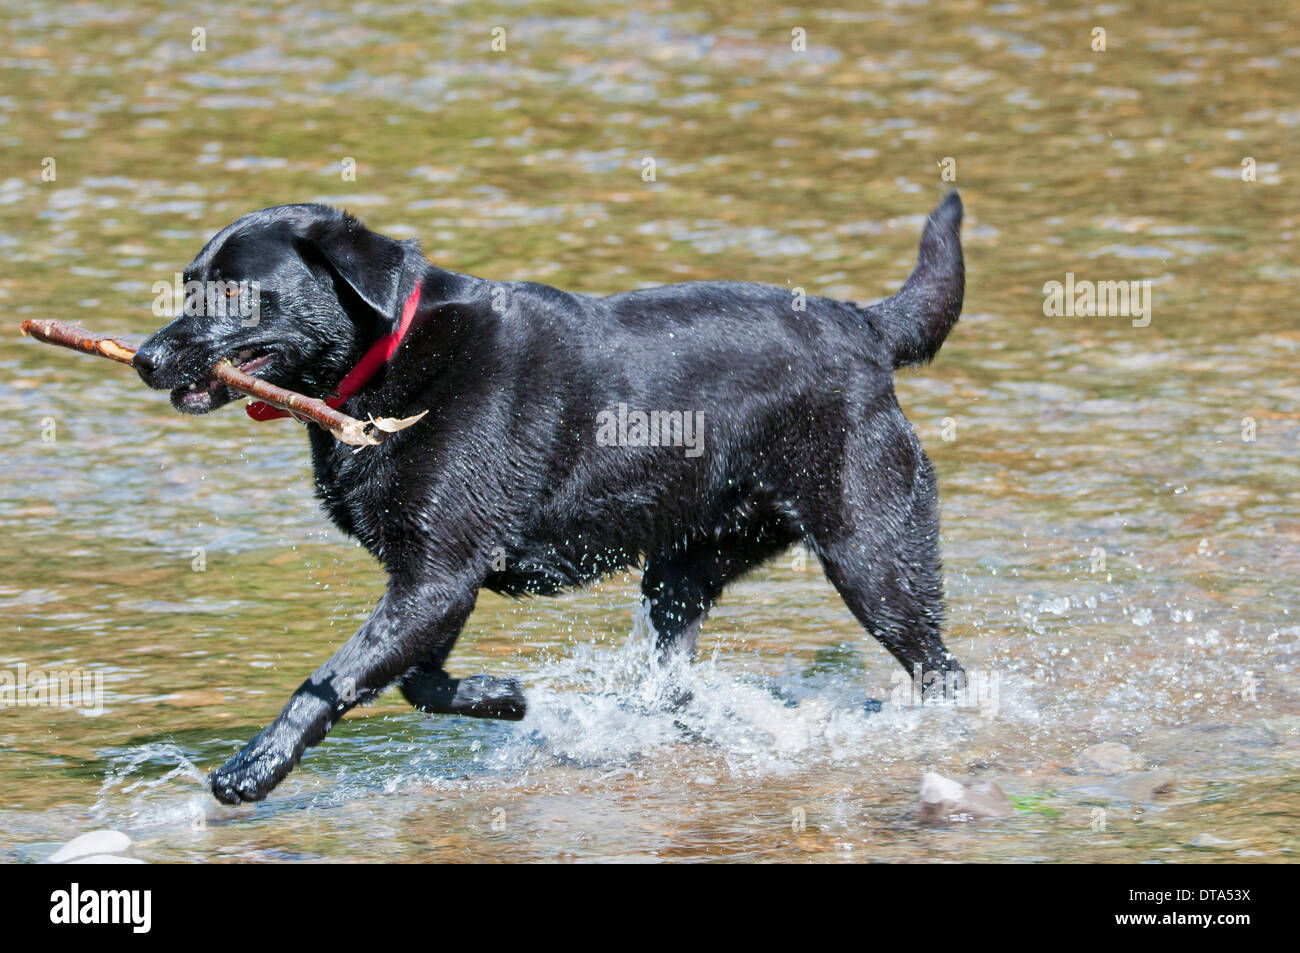 Black labrador running in river Stock Photo